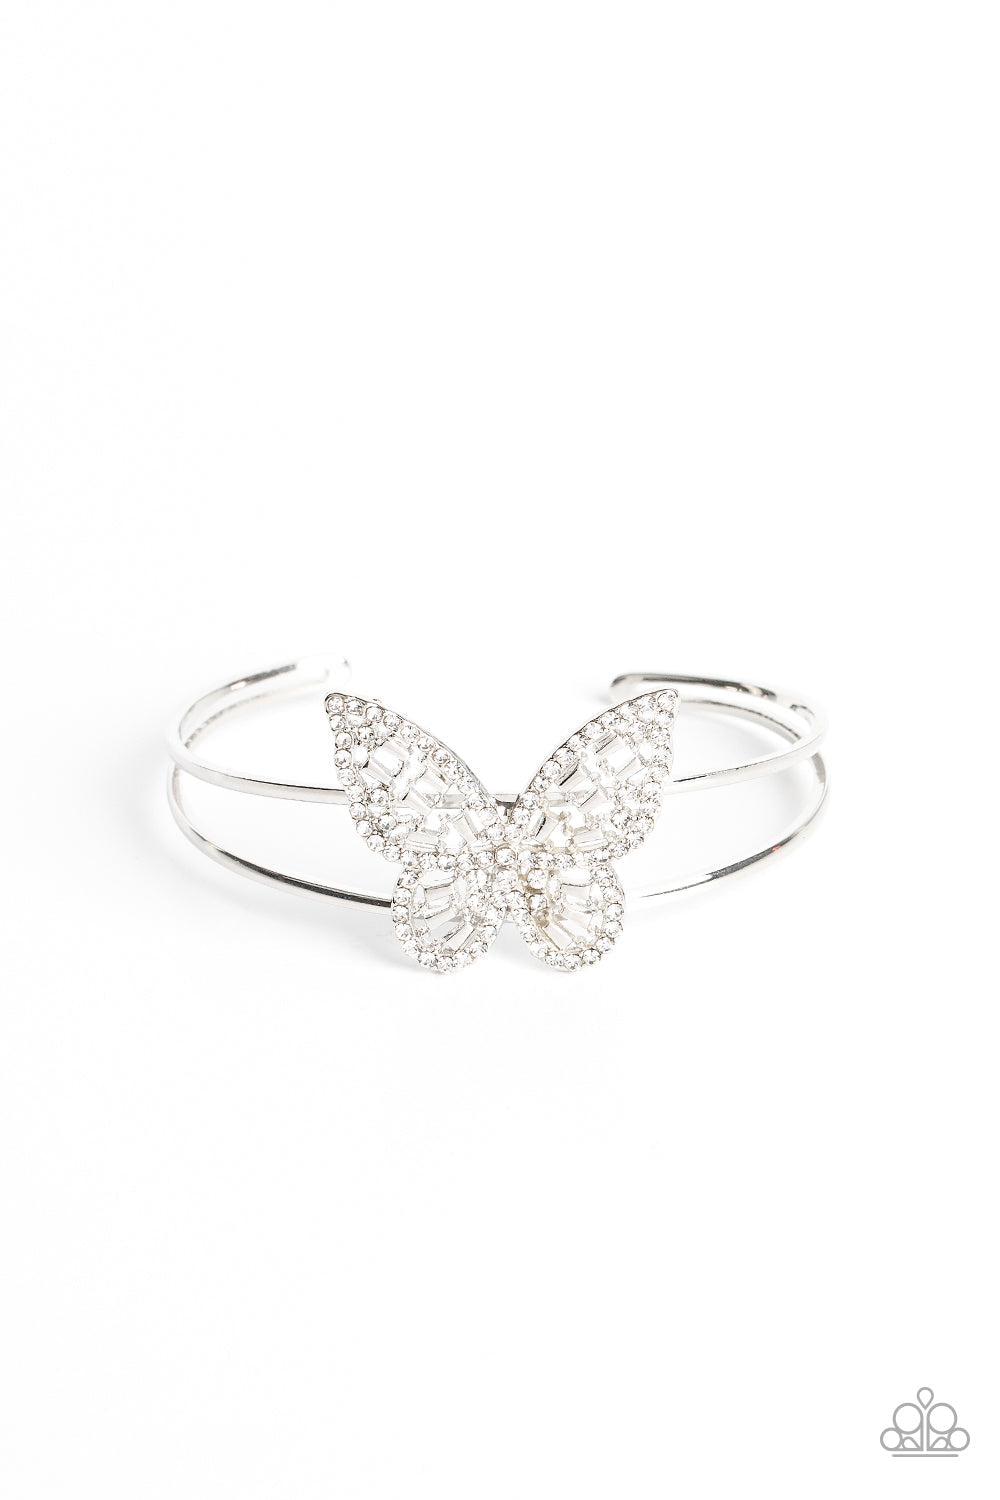 Butterfly Bella White Rhinestone Cuff Bracelet - Paparazzi Accessories- lightbox - CarasShop.com - $5 Jewelry by Cara Jewels